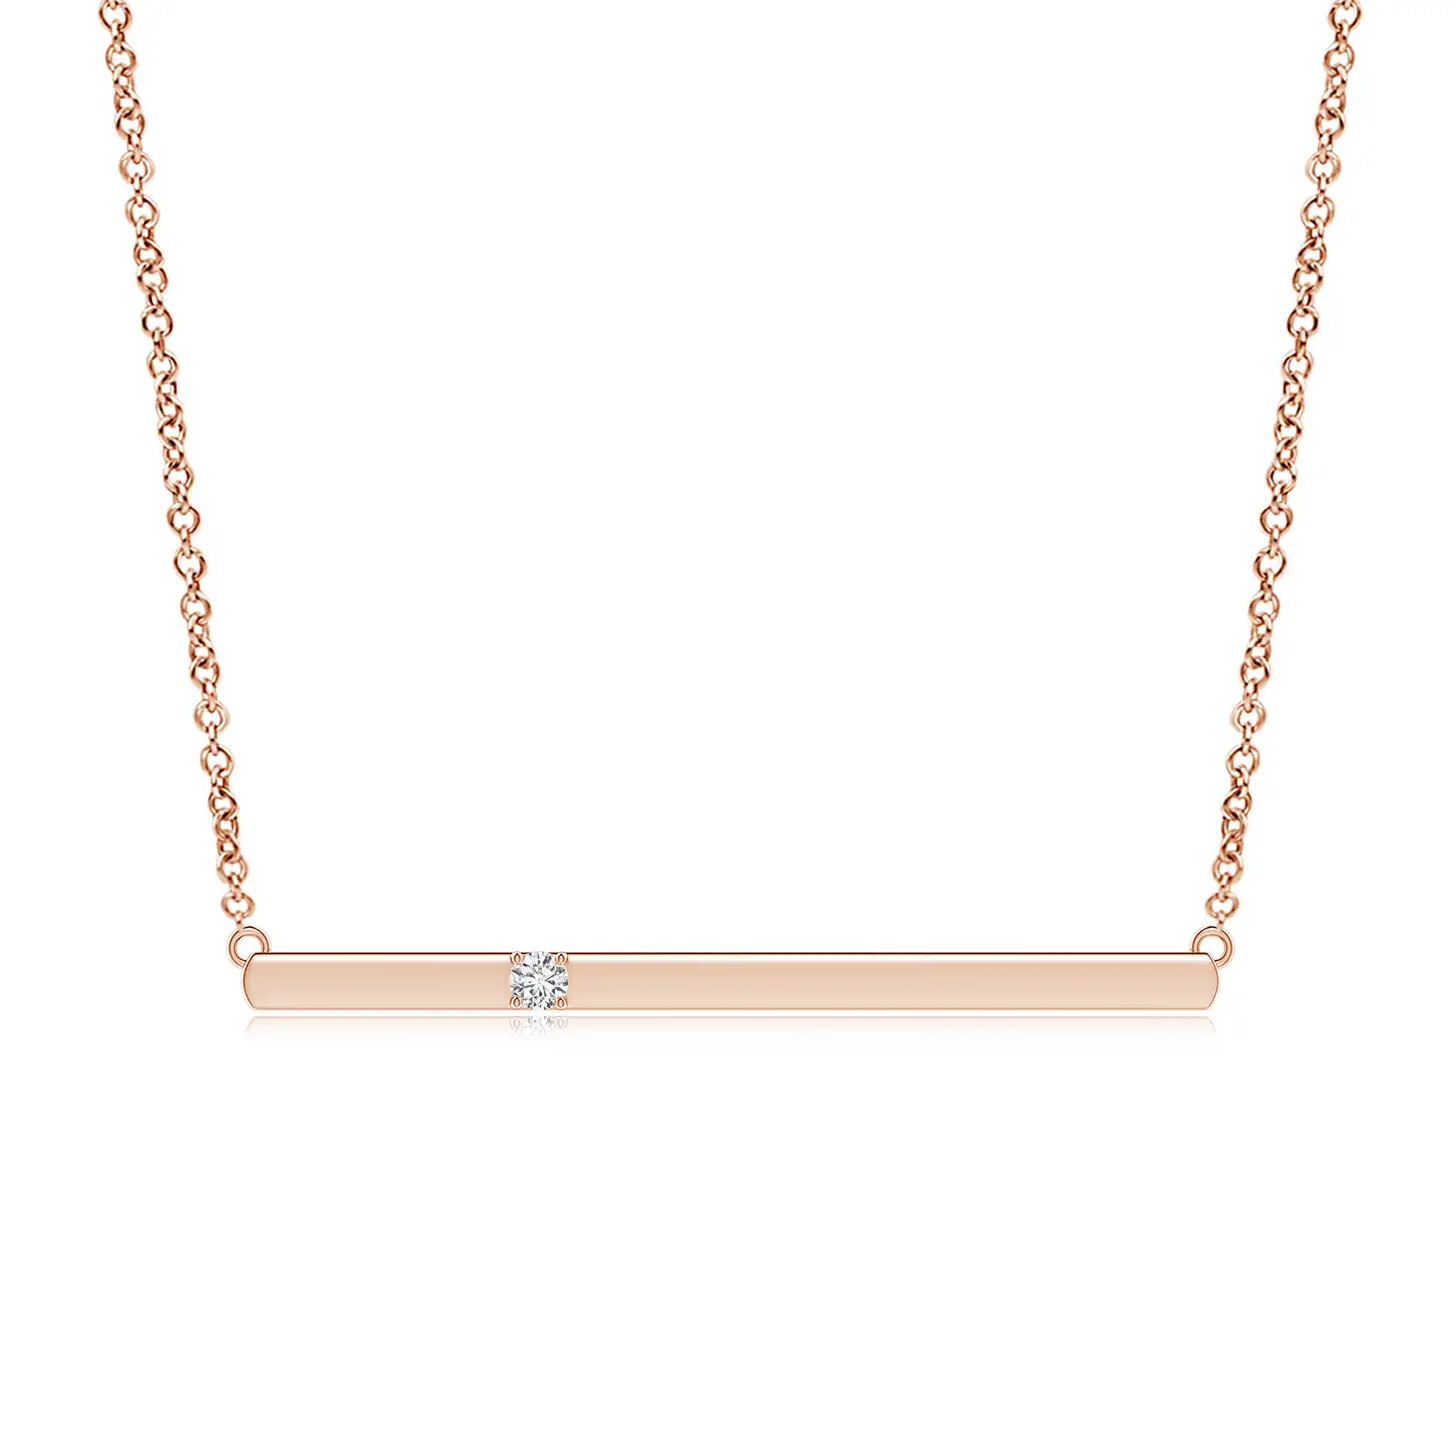 Angara bar pendant necklace in 14k rose gold with diamond, starting at $369 at Angara